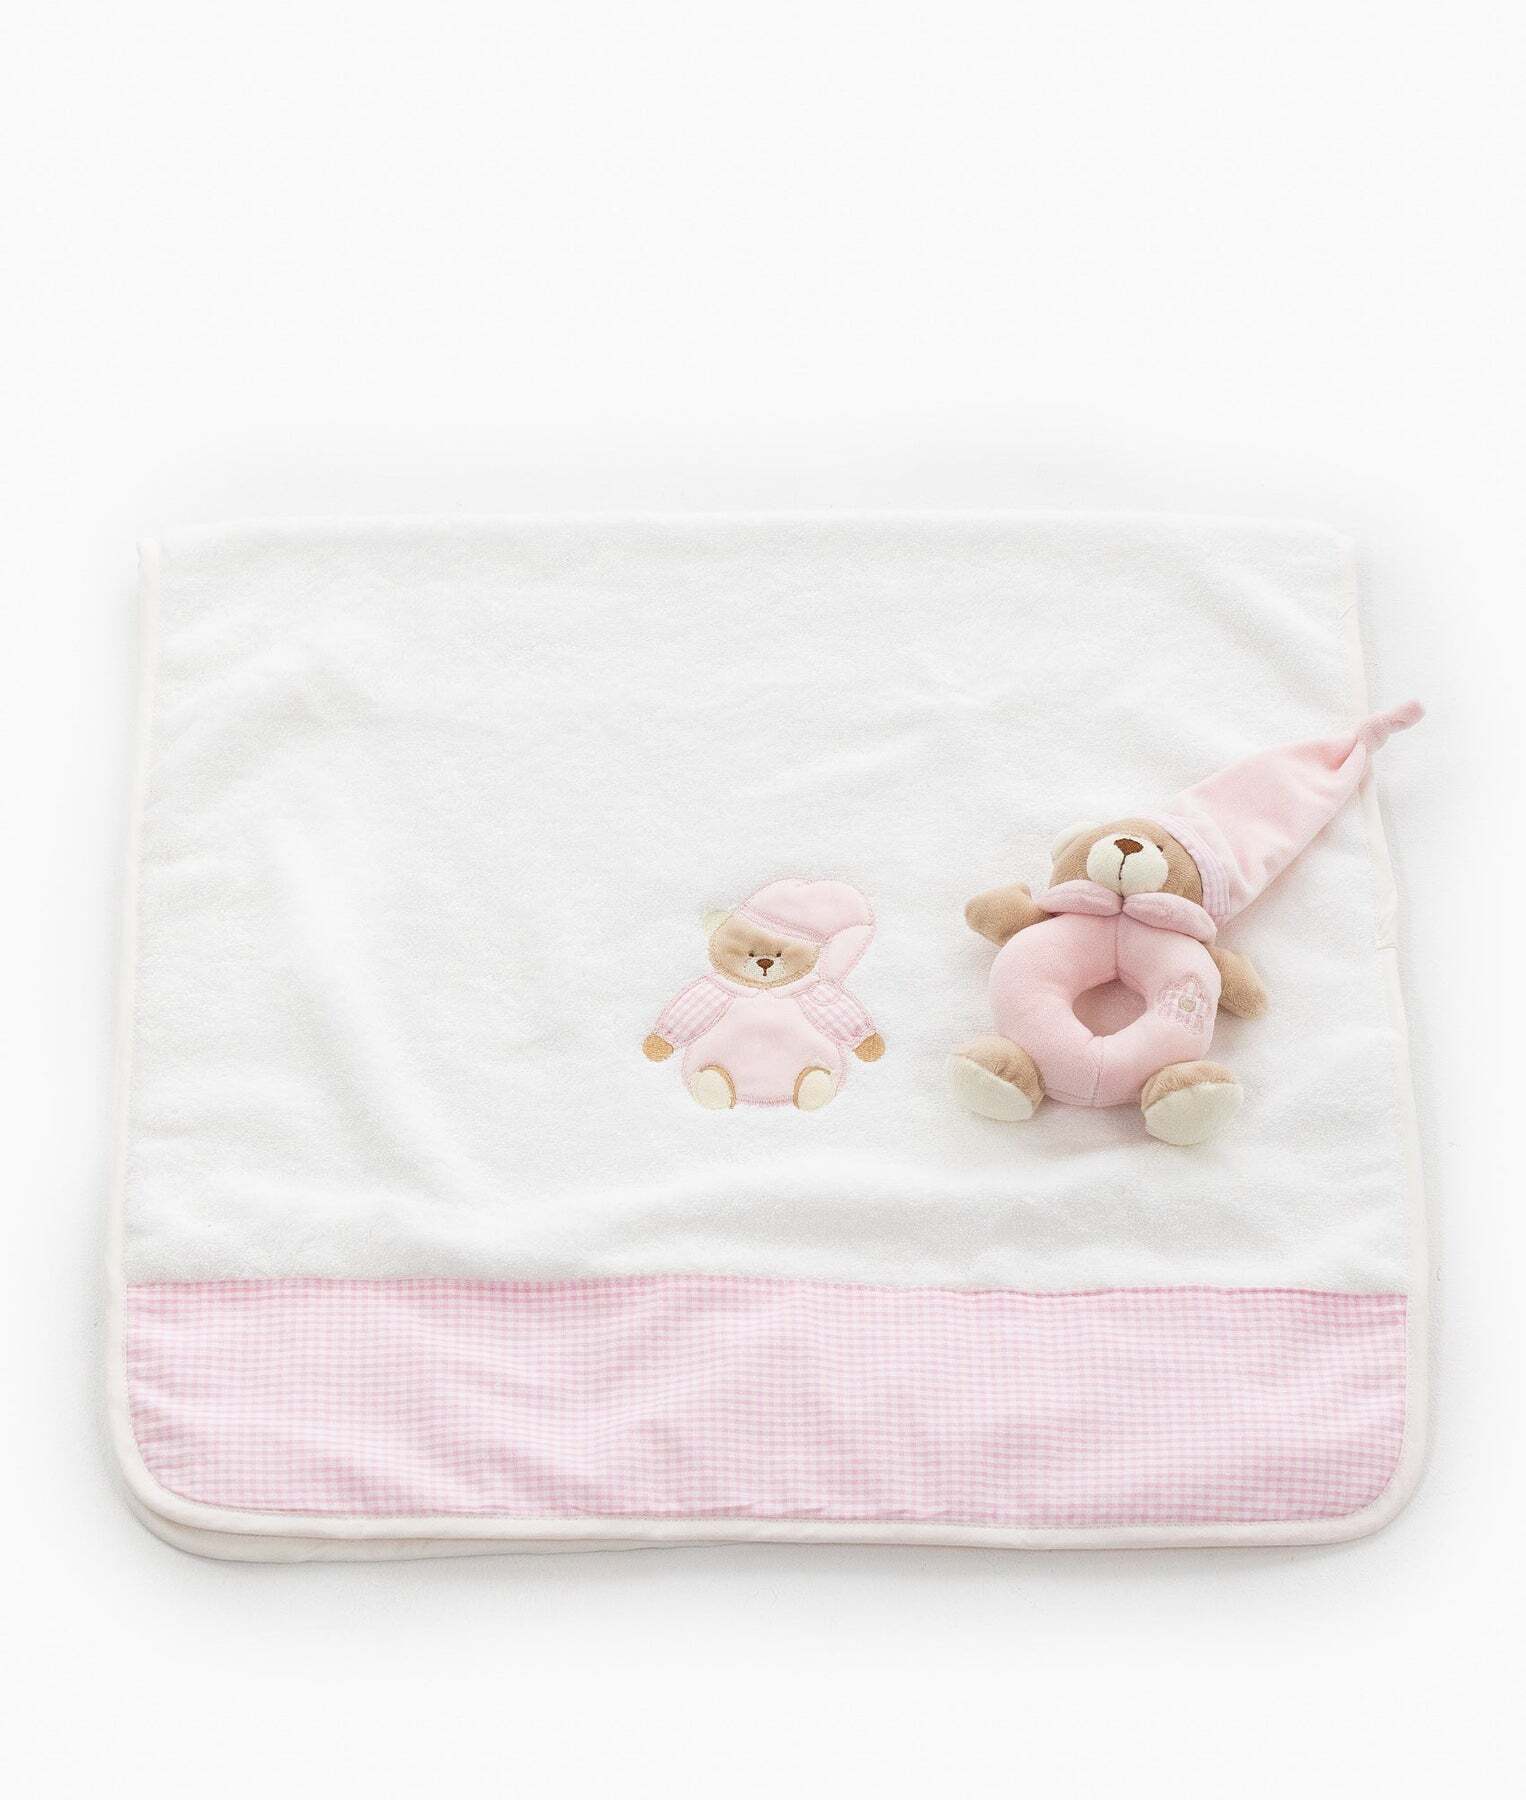 bear-towel-rattle-set-pink-581_1800x1800